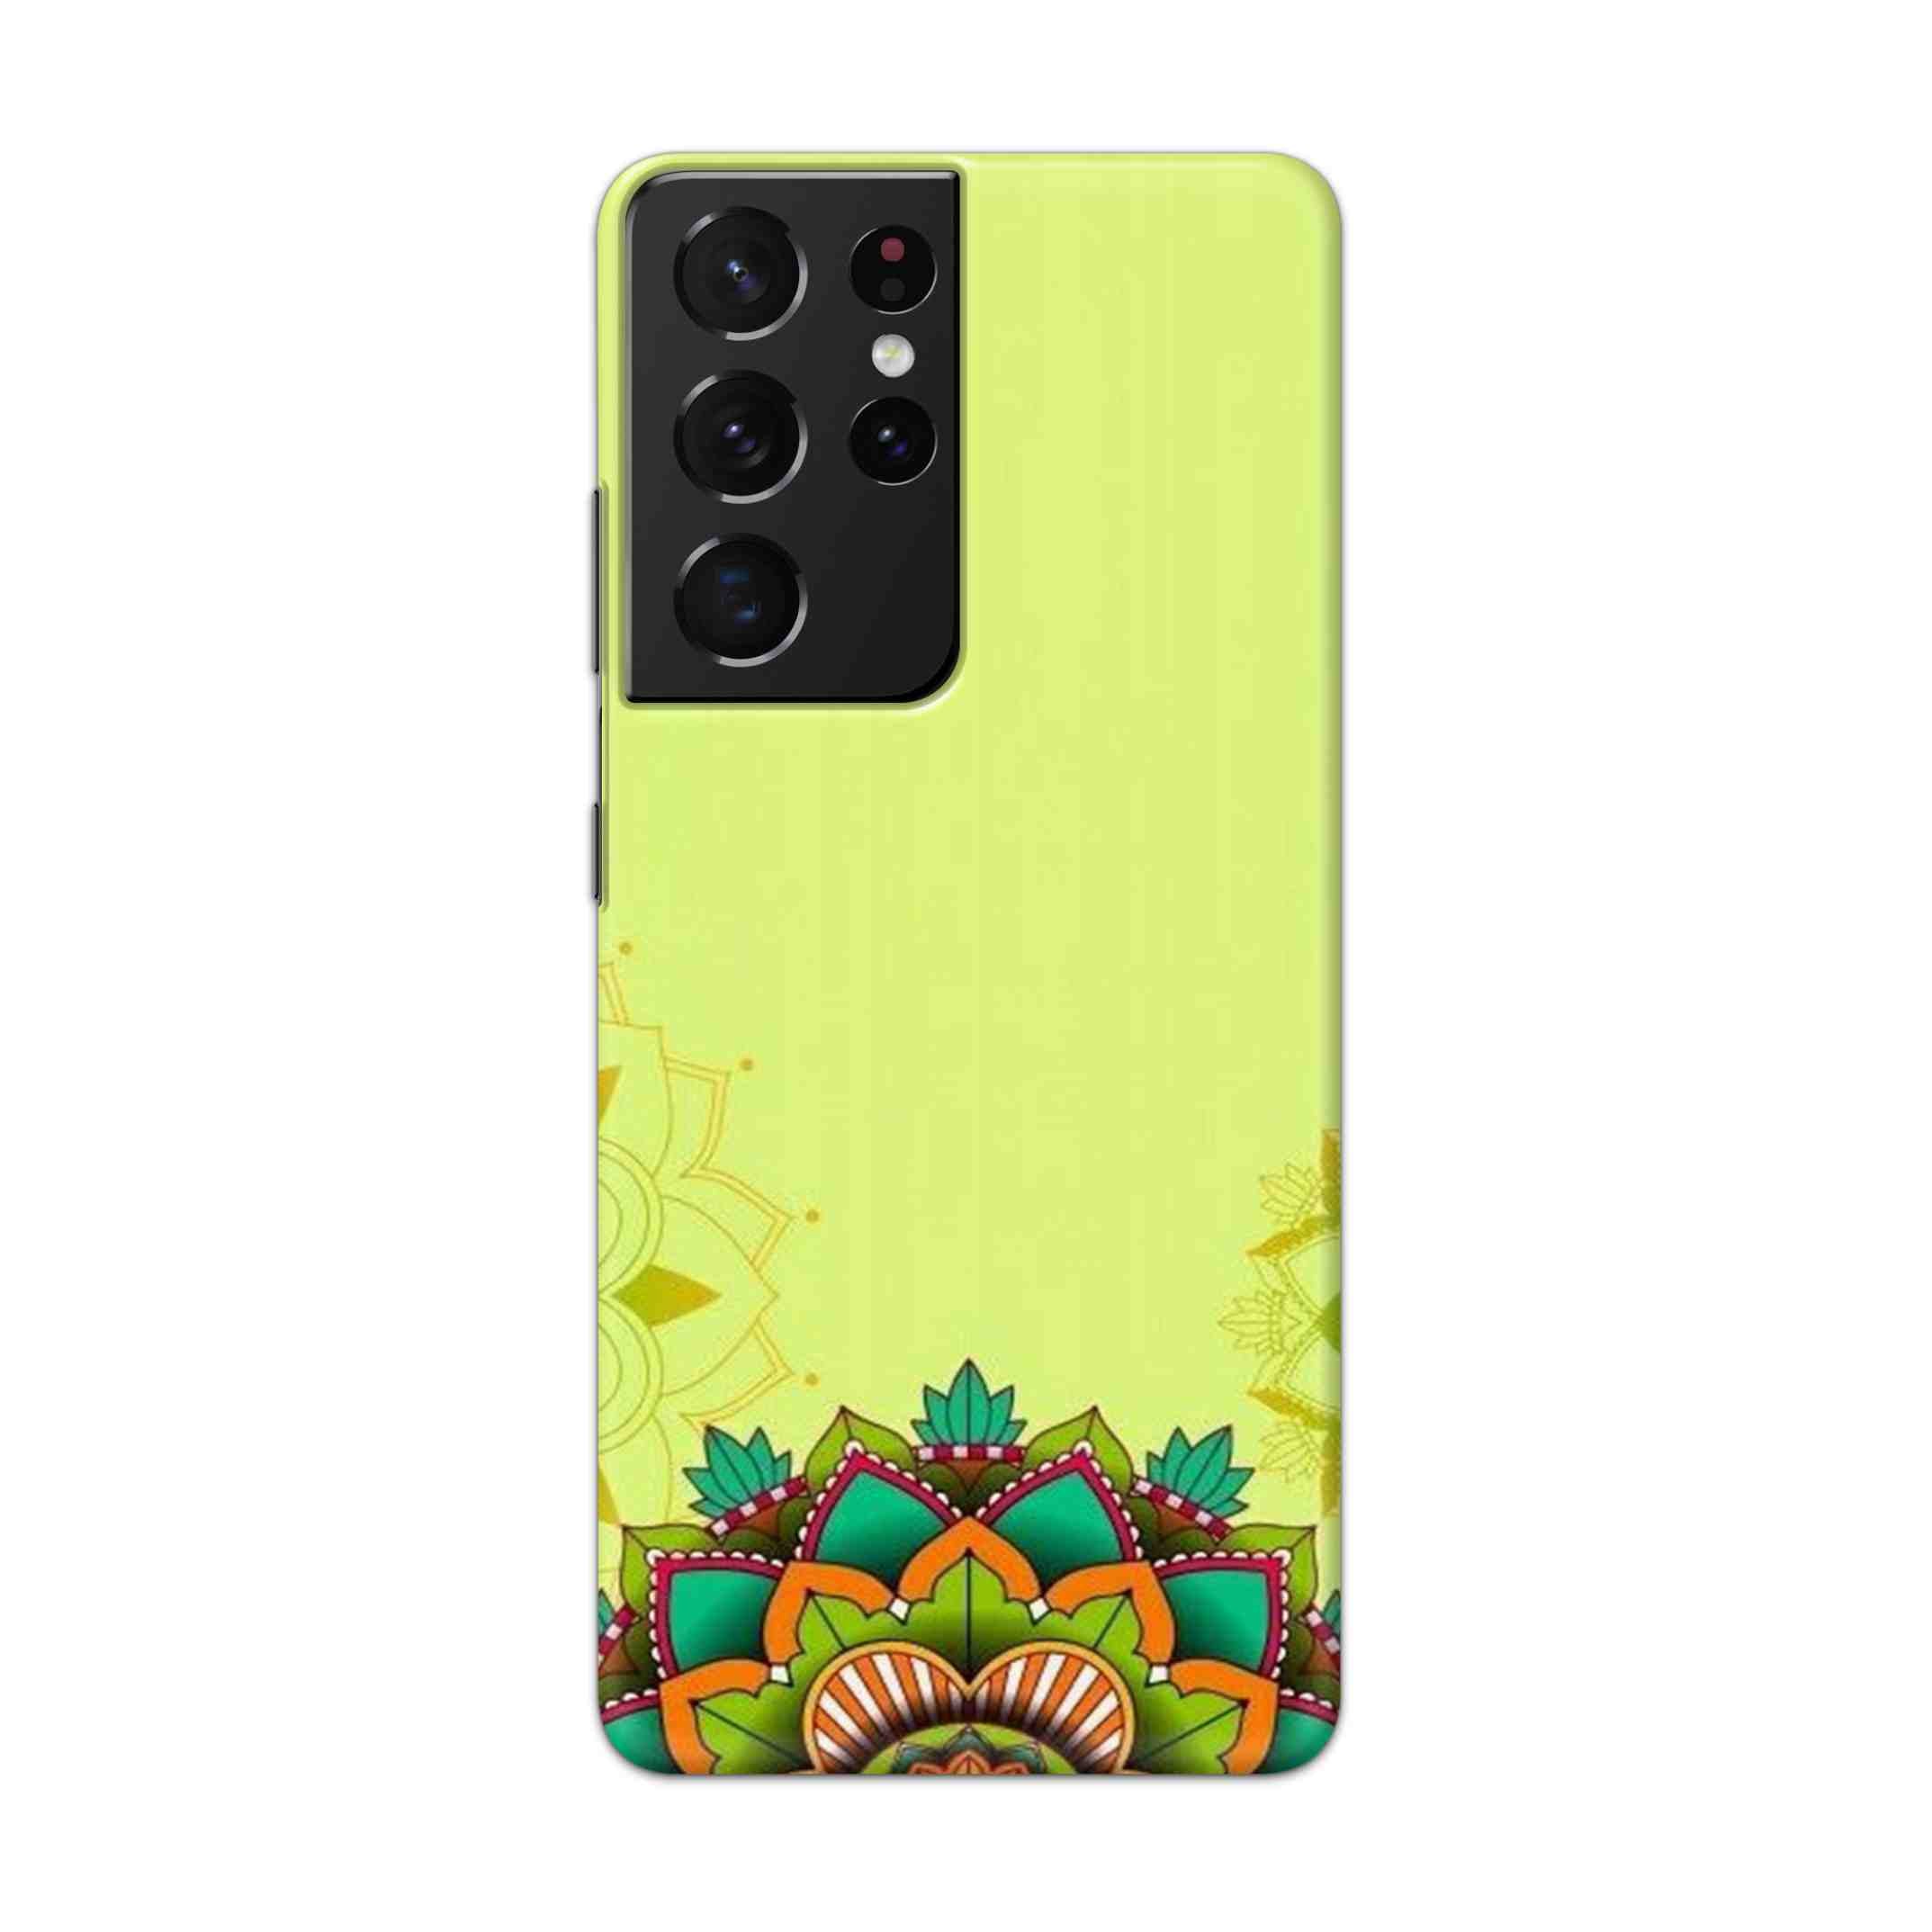 Buy Flower Mandala Hard Back Mobile Phone Case Cover For Samsung Galaxy S21 Ultra Online